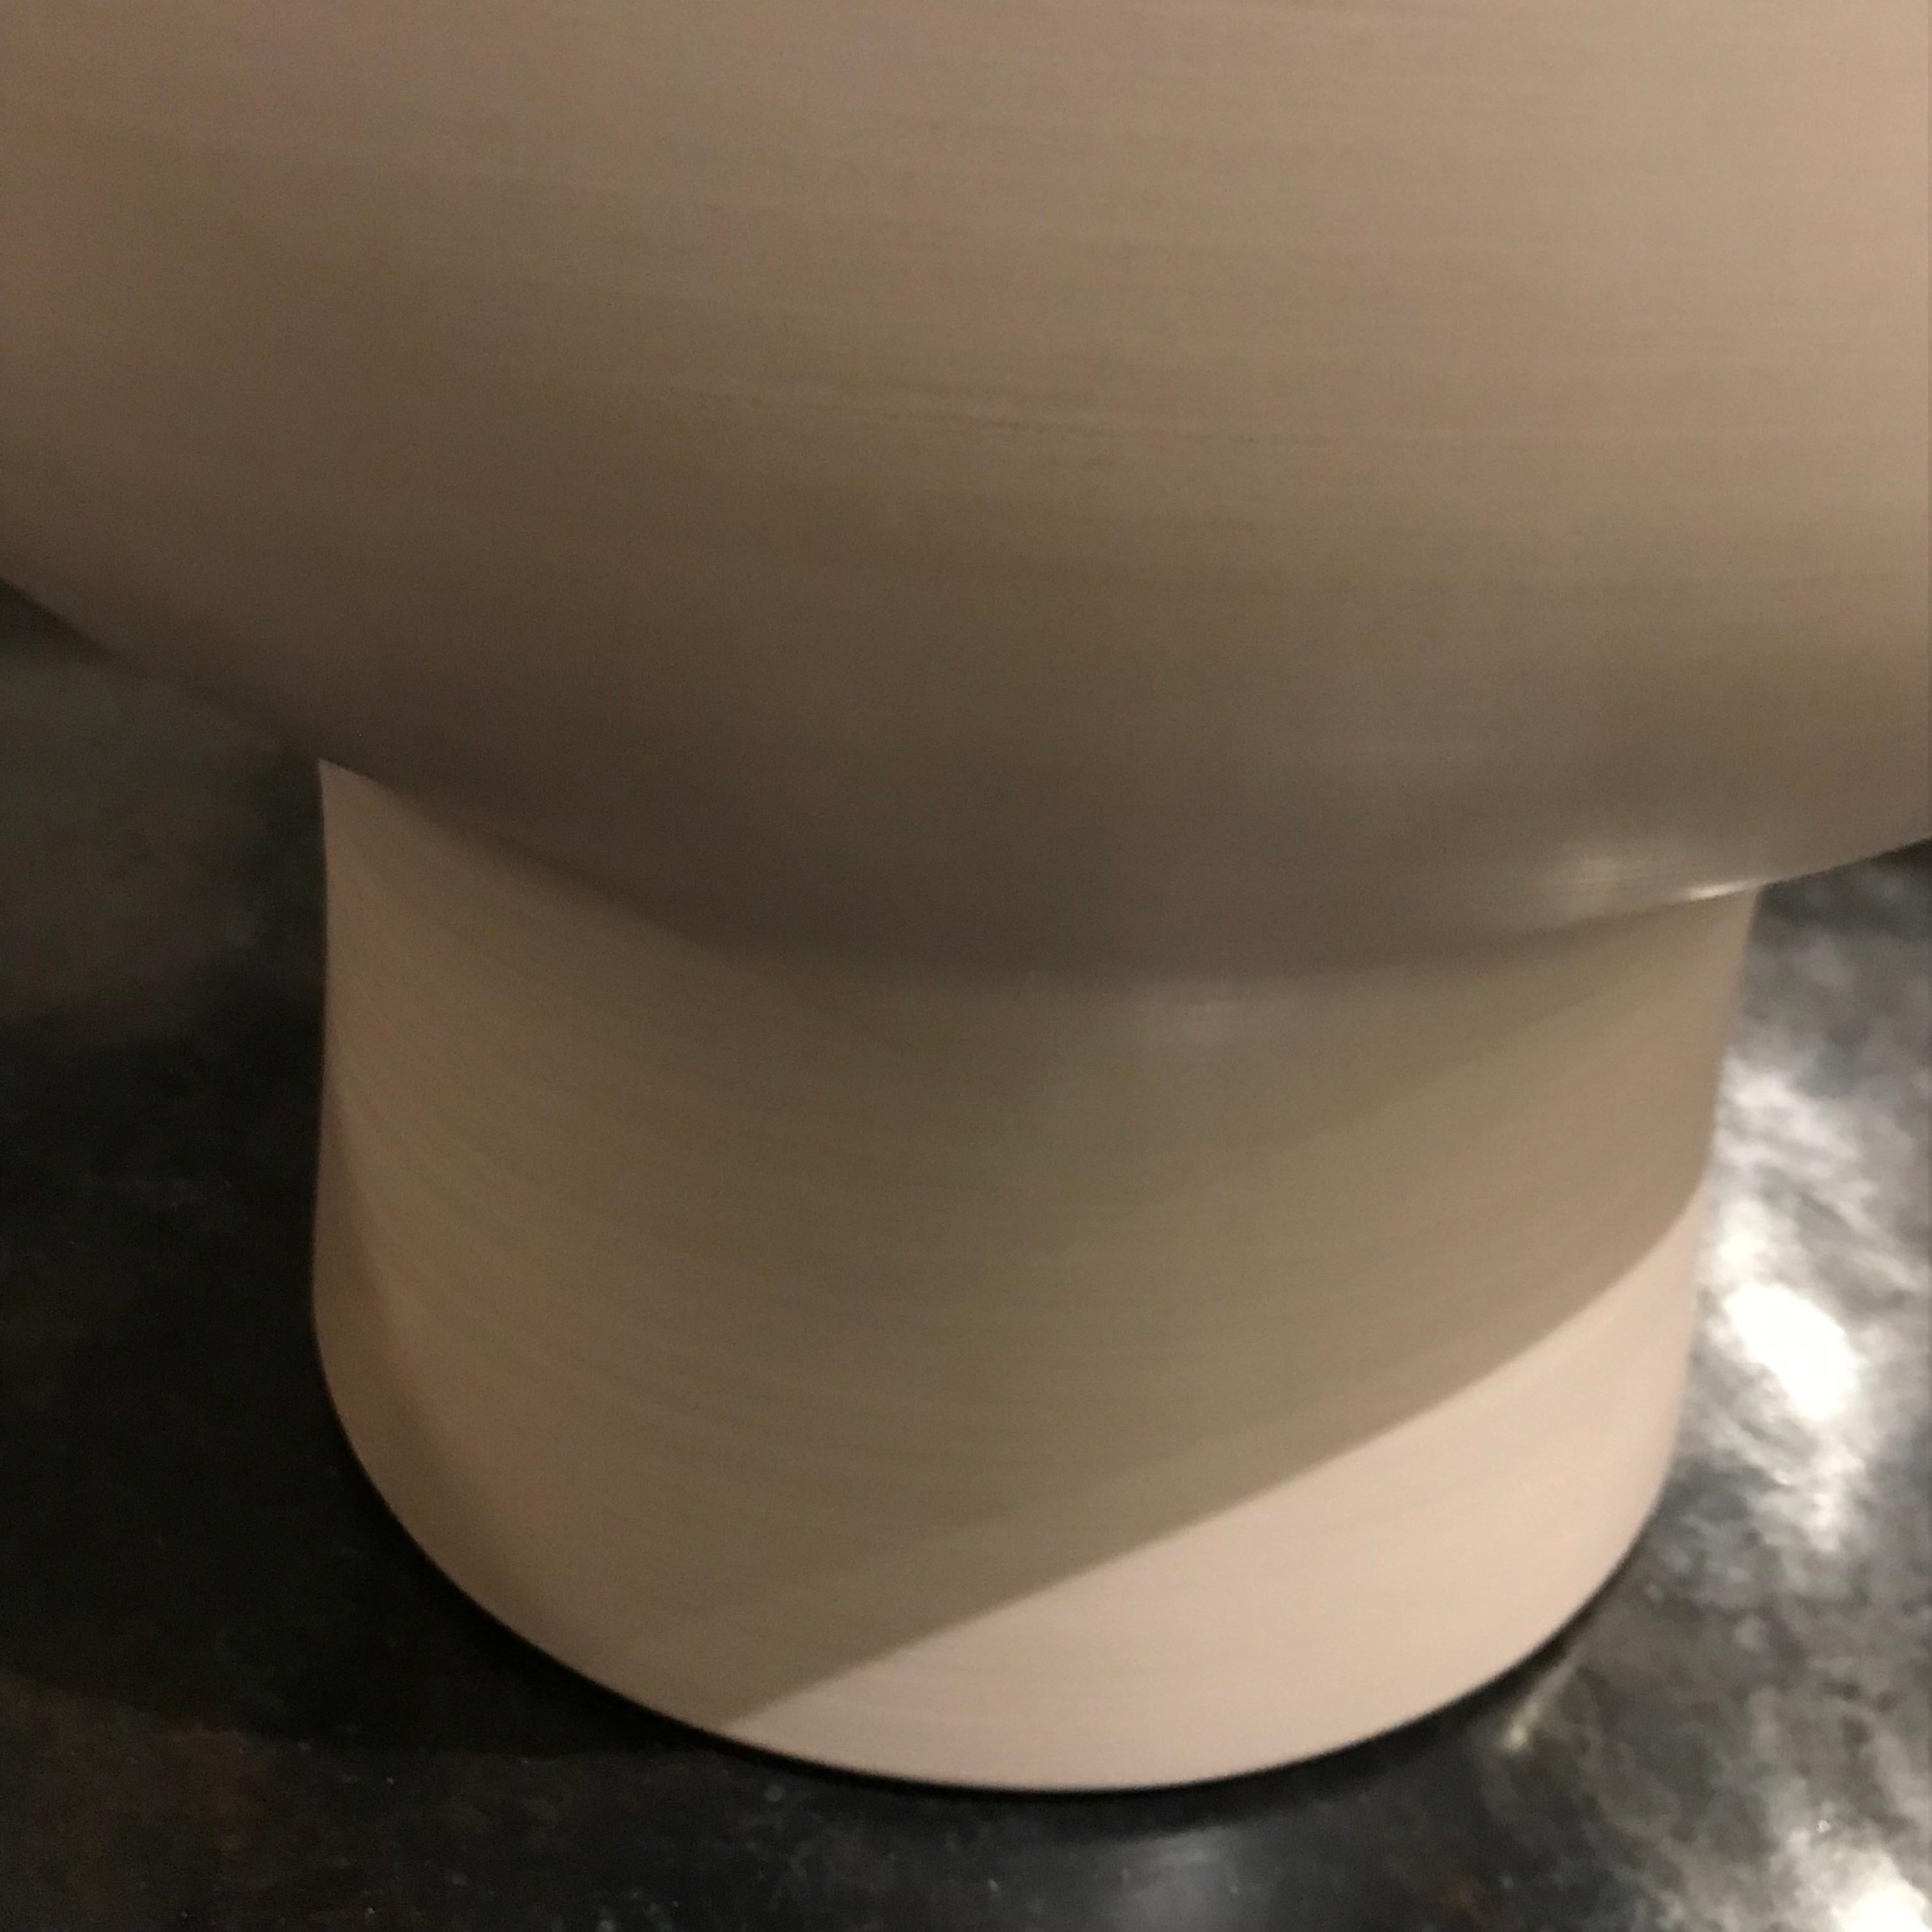 vase with thin neck